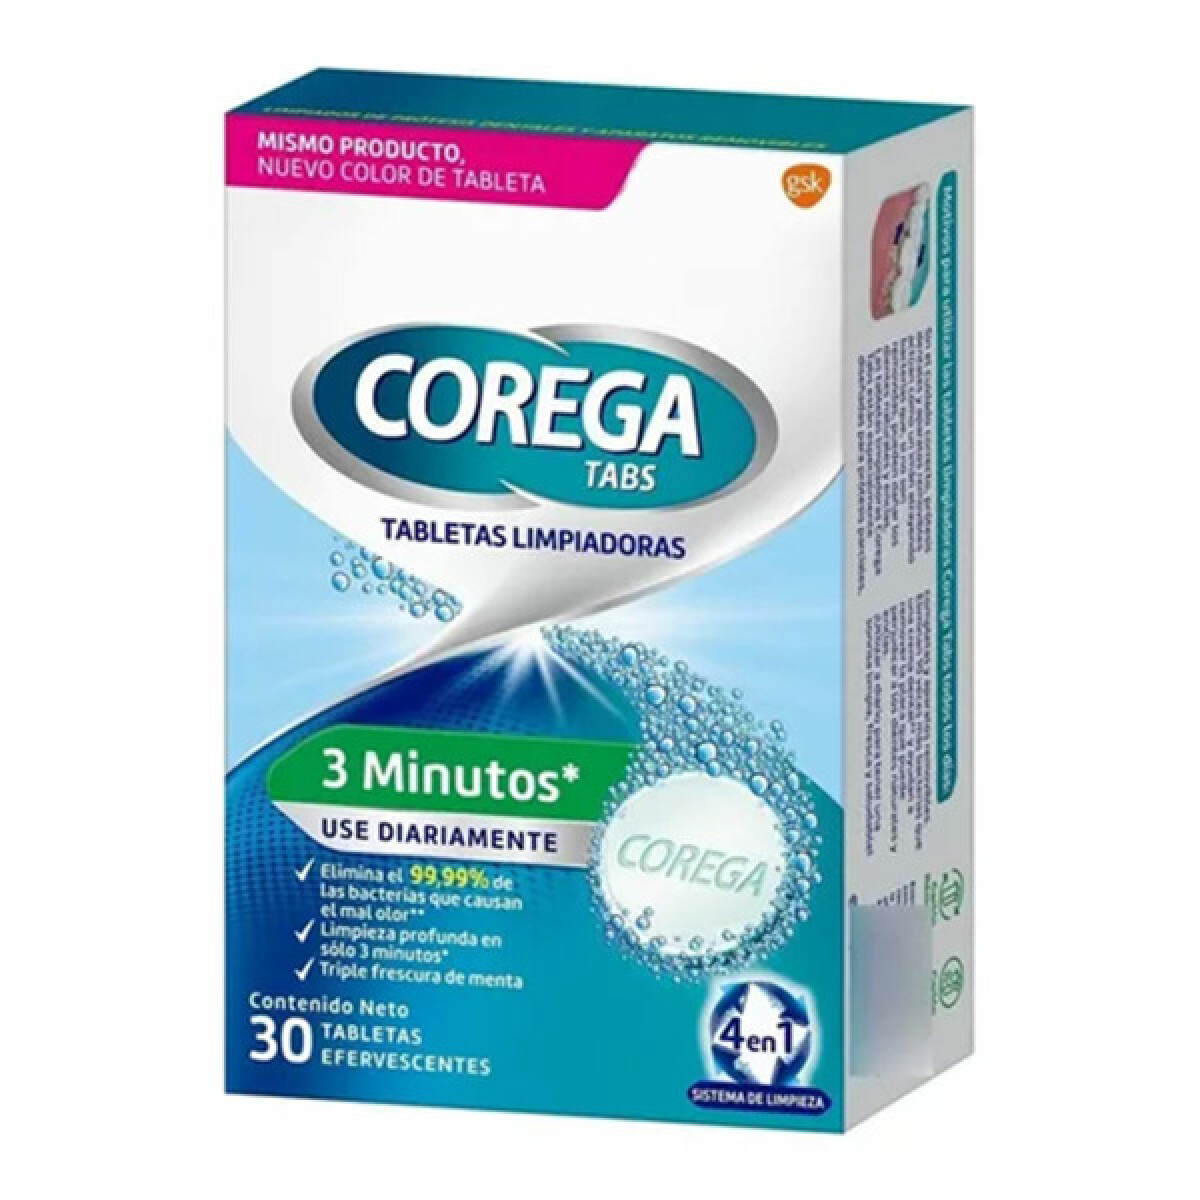 Tabletas limpiadoras de prótesis dental Corega - 3 Minutos uso diario 